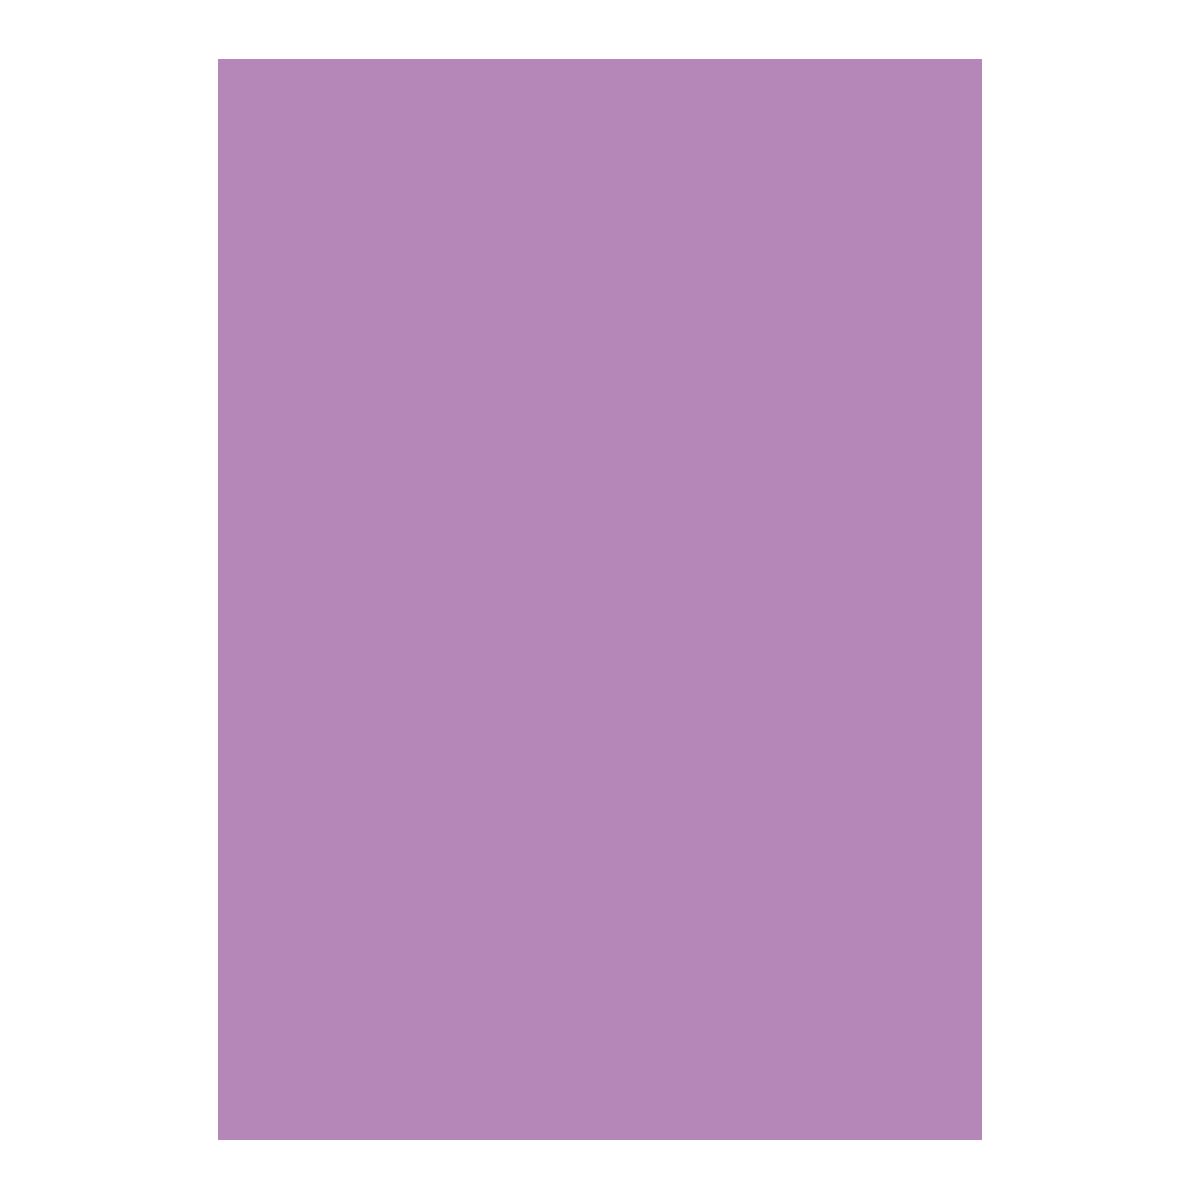 Arkusz piankowy Titanum Craft-Fun Series pianka dekoracyjna A4 5 szt. kolor: fiolet 5 ark. (6119)